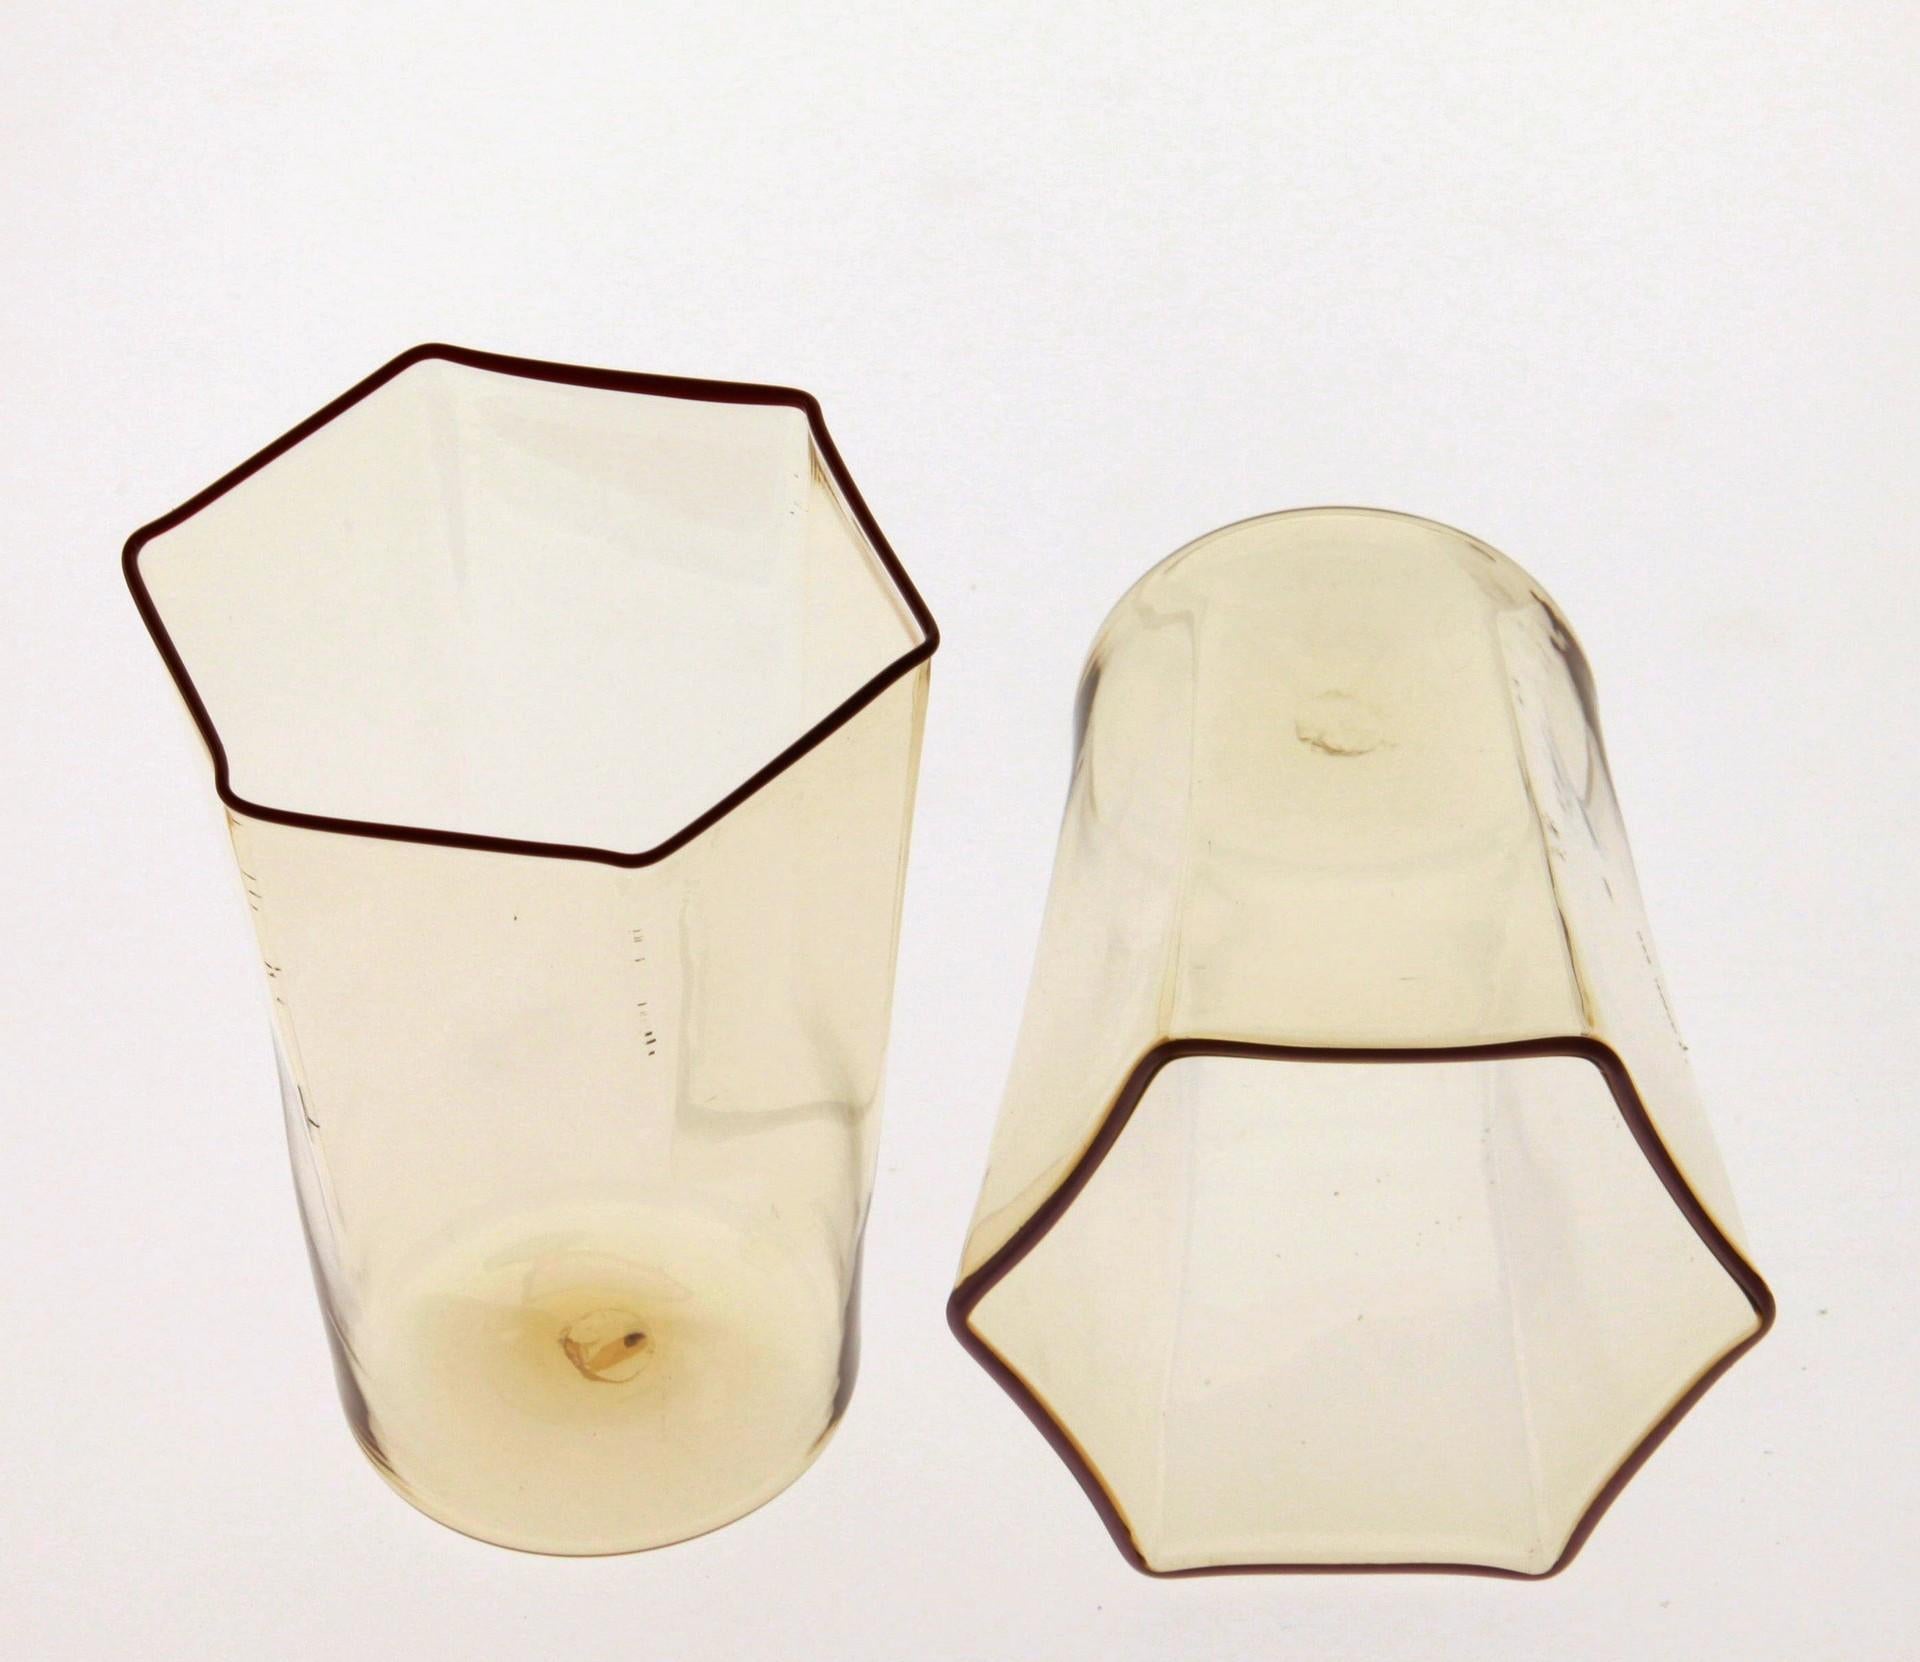 Six Hexagonal Pagliesco Glasses, Assorted Color Rim, Carlo Scarpa, 1932 Design 10